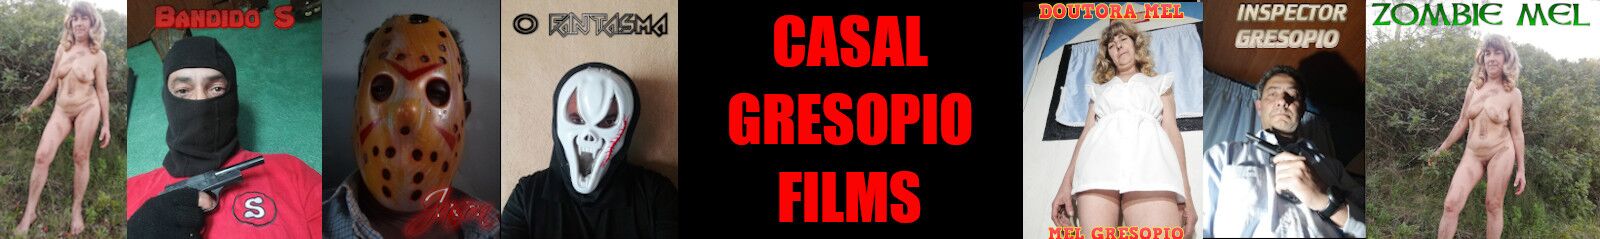 Casal Gresopio films